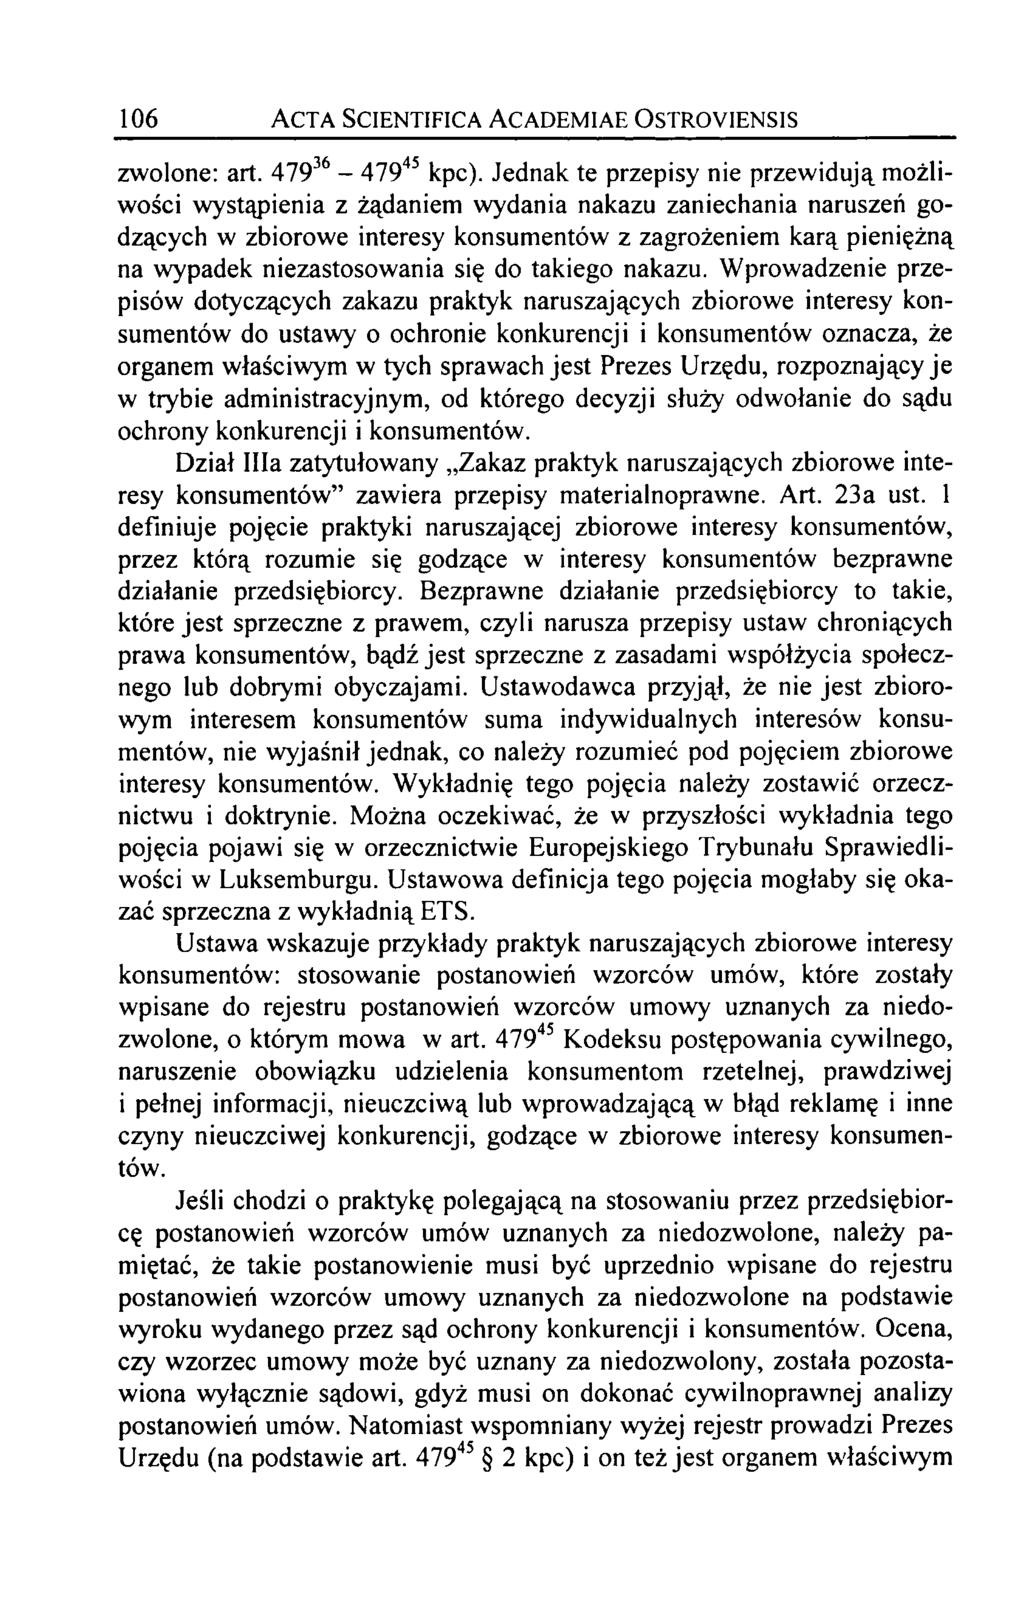 106 Acta Scientifica Academiae Ostroyiensis zwolone: art. 47936-47945 kpc).